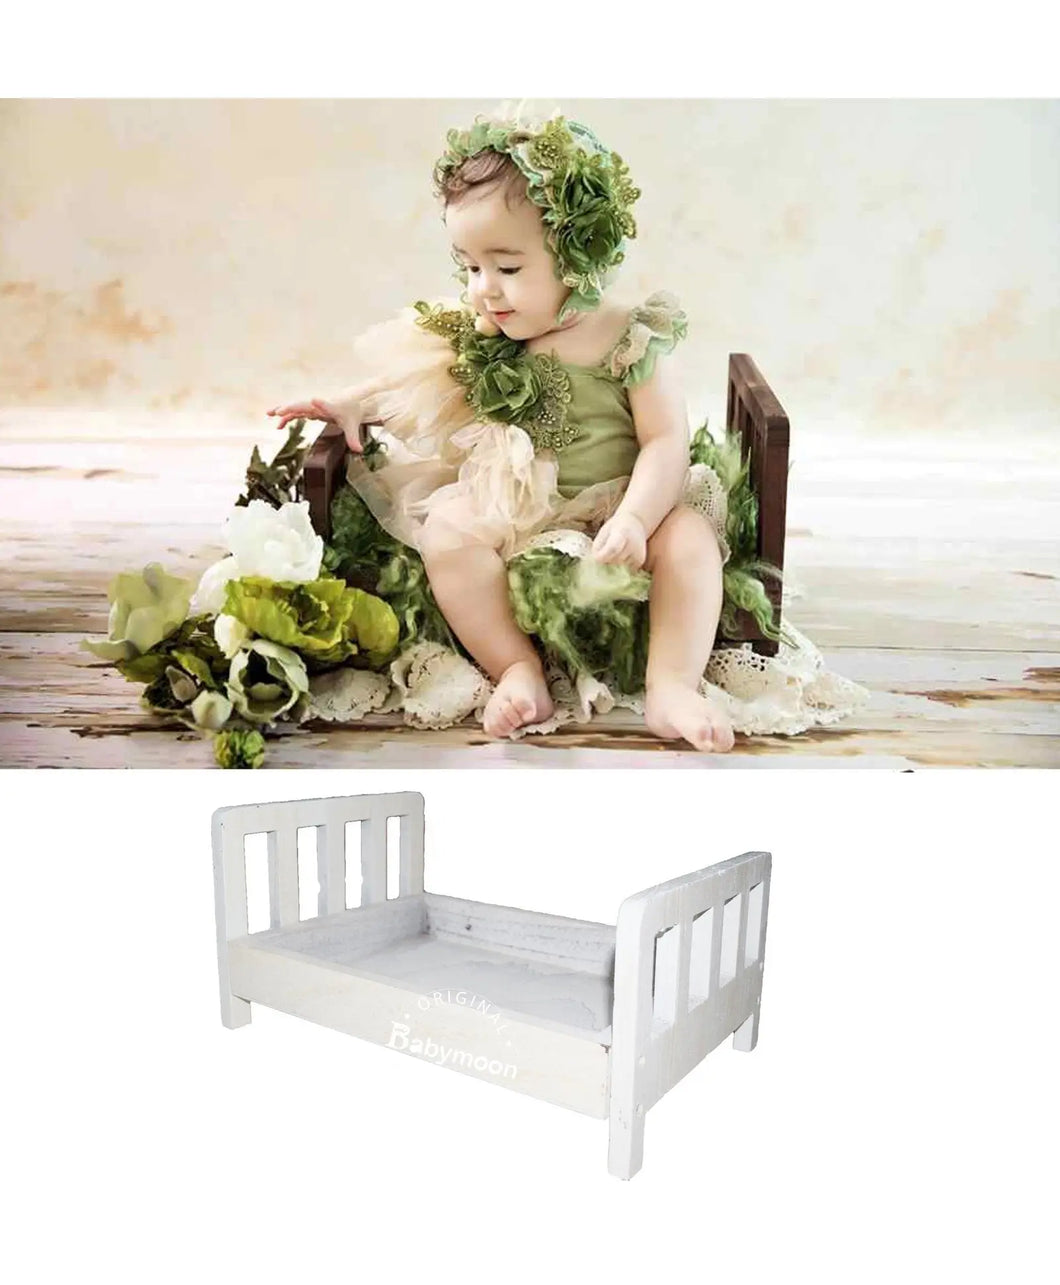 Babymoon Rustic Bed Wooden Properties Photoshoot Prop-White